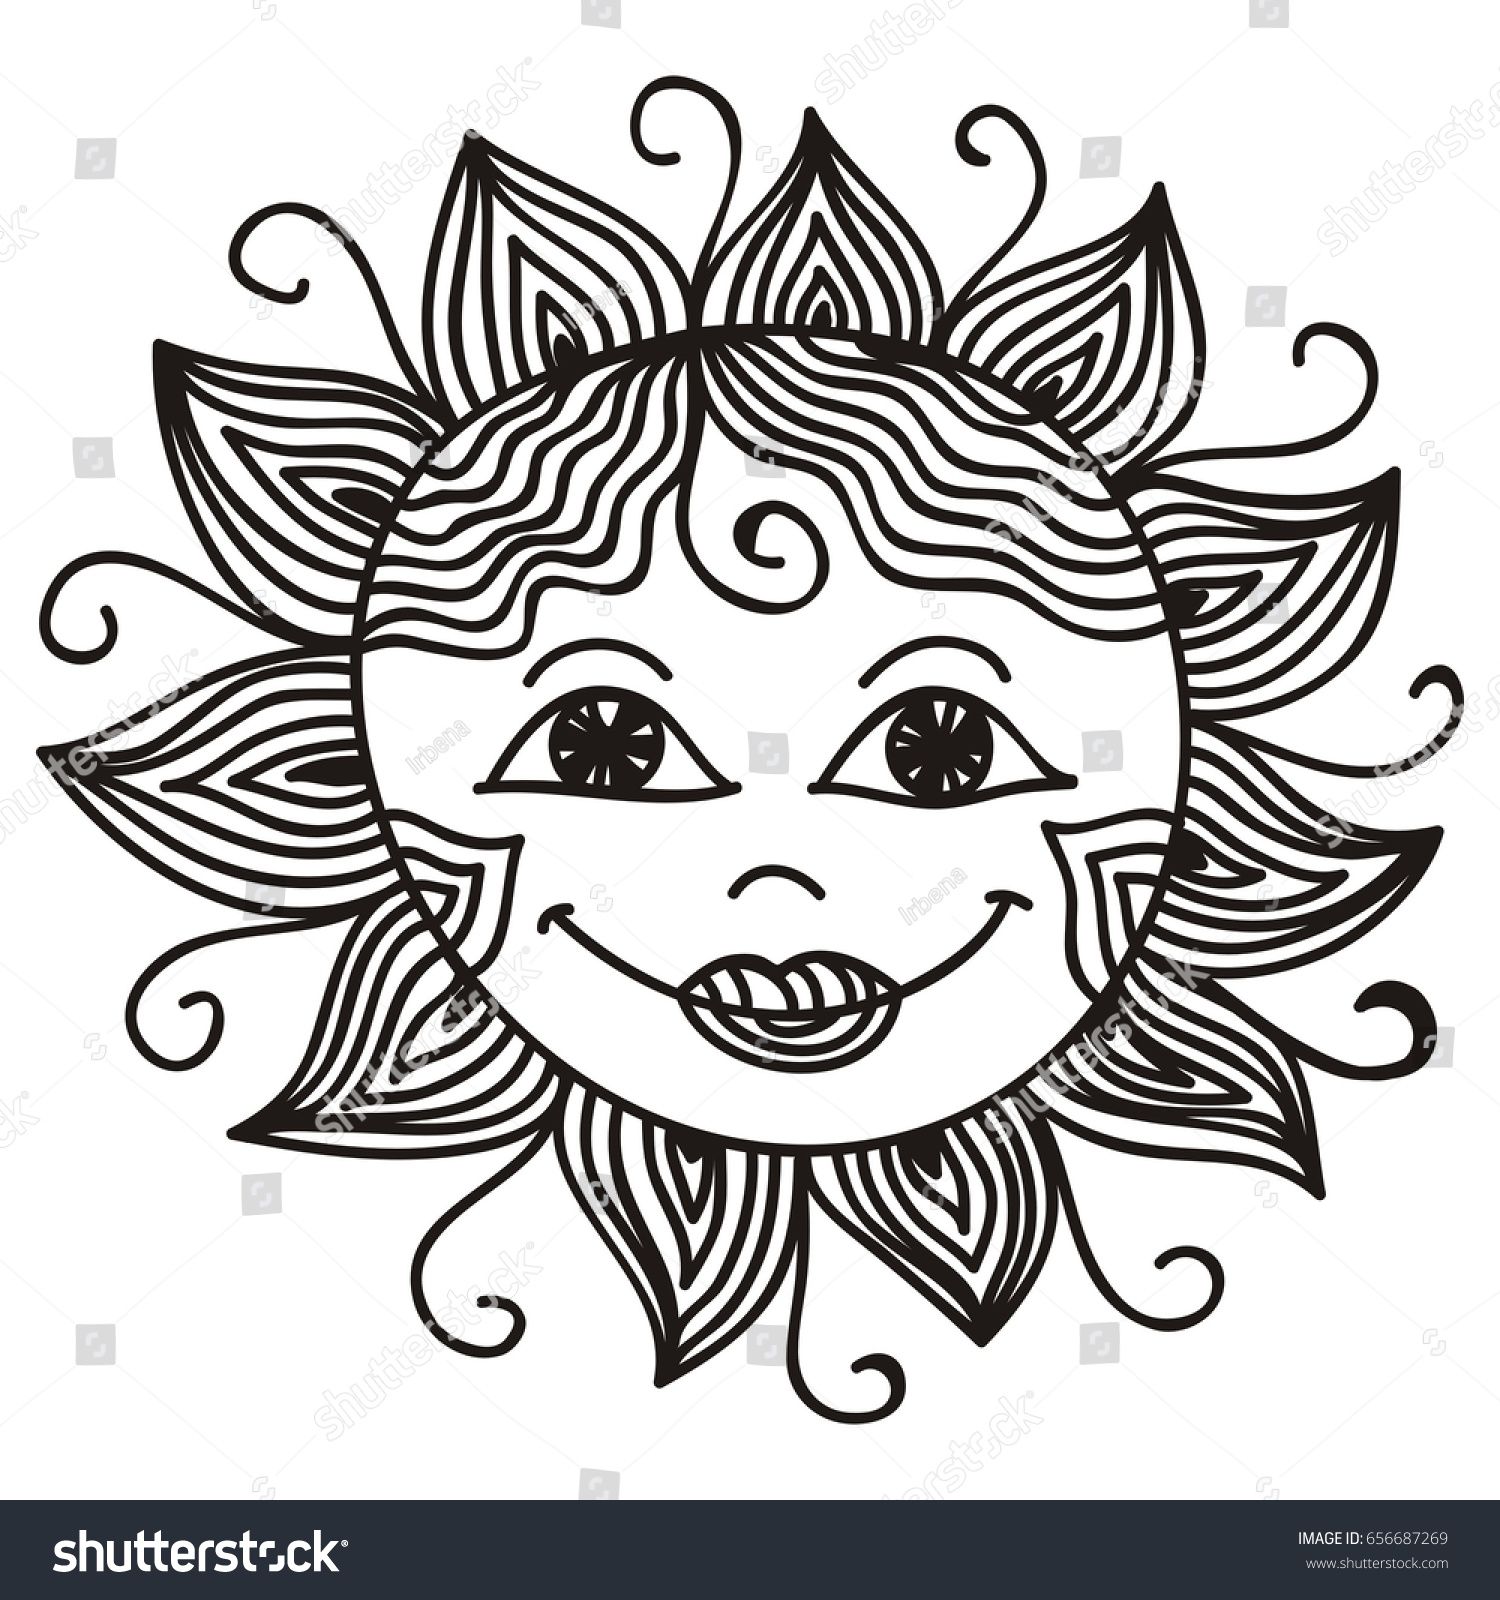 Cute Cartoon Sun Vector Illustration Stock Vector Royalty Free 656687269